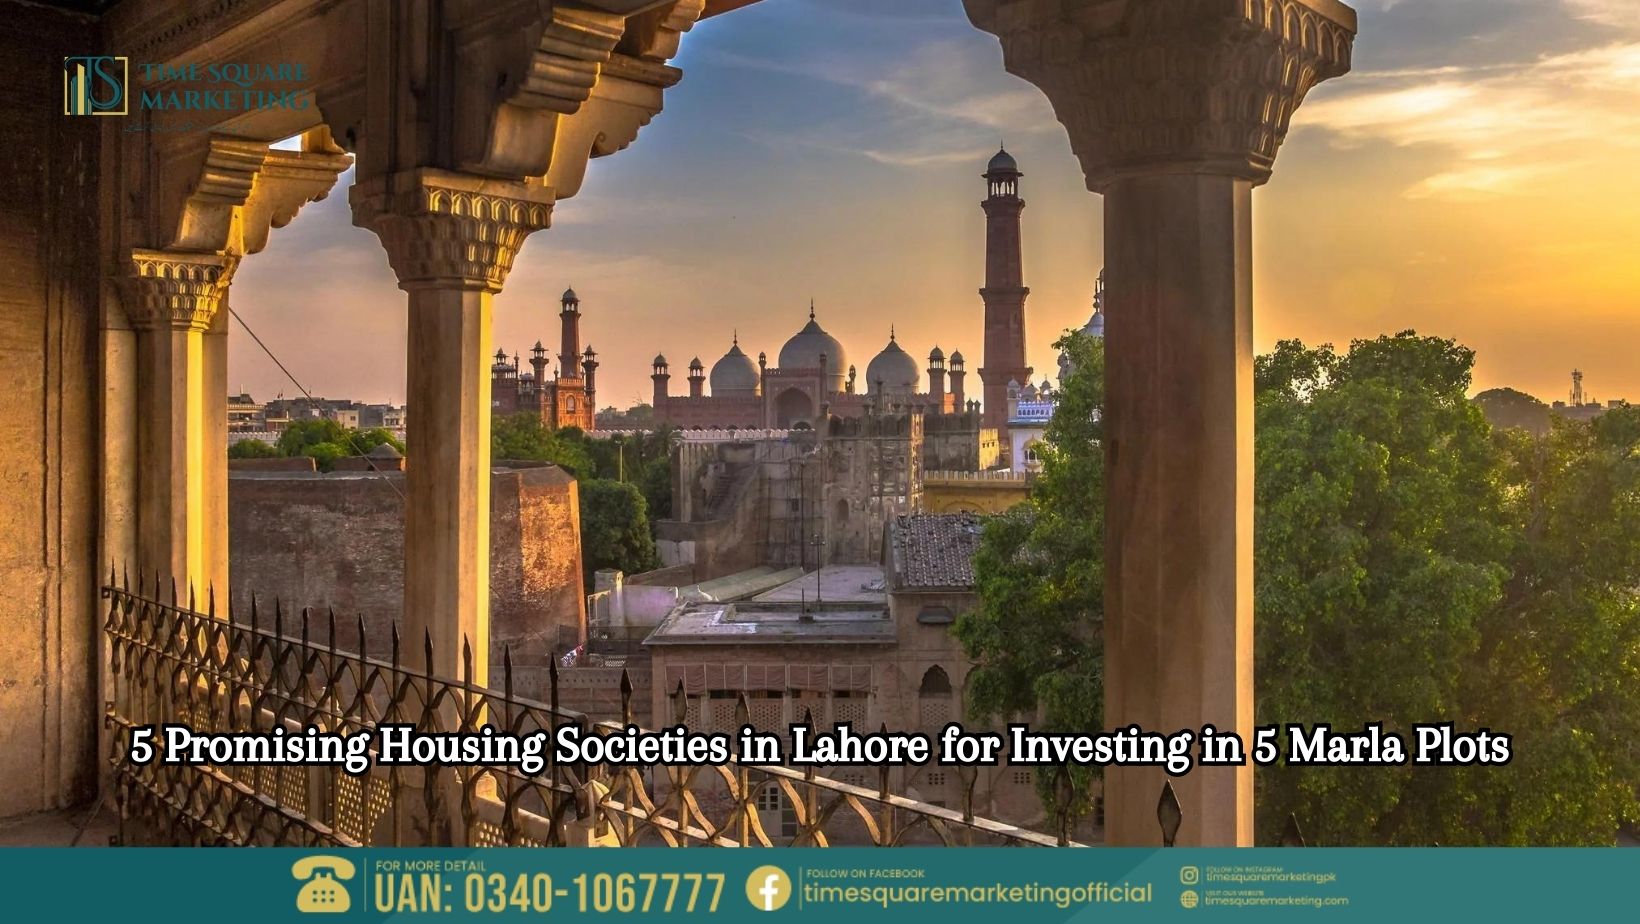 5 Promising Housing Societies in Lahore for Investing in 5 Marla Plots